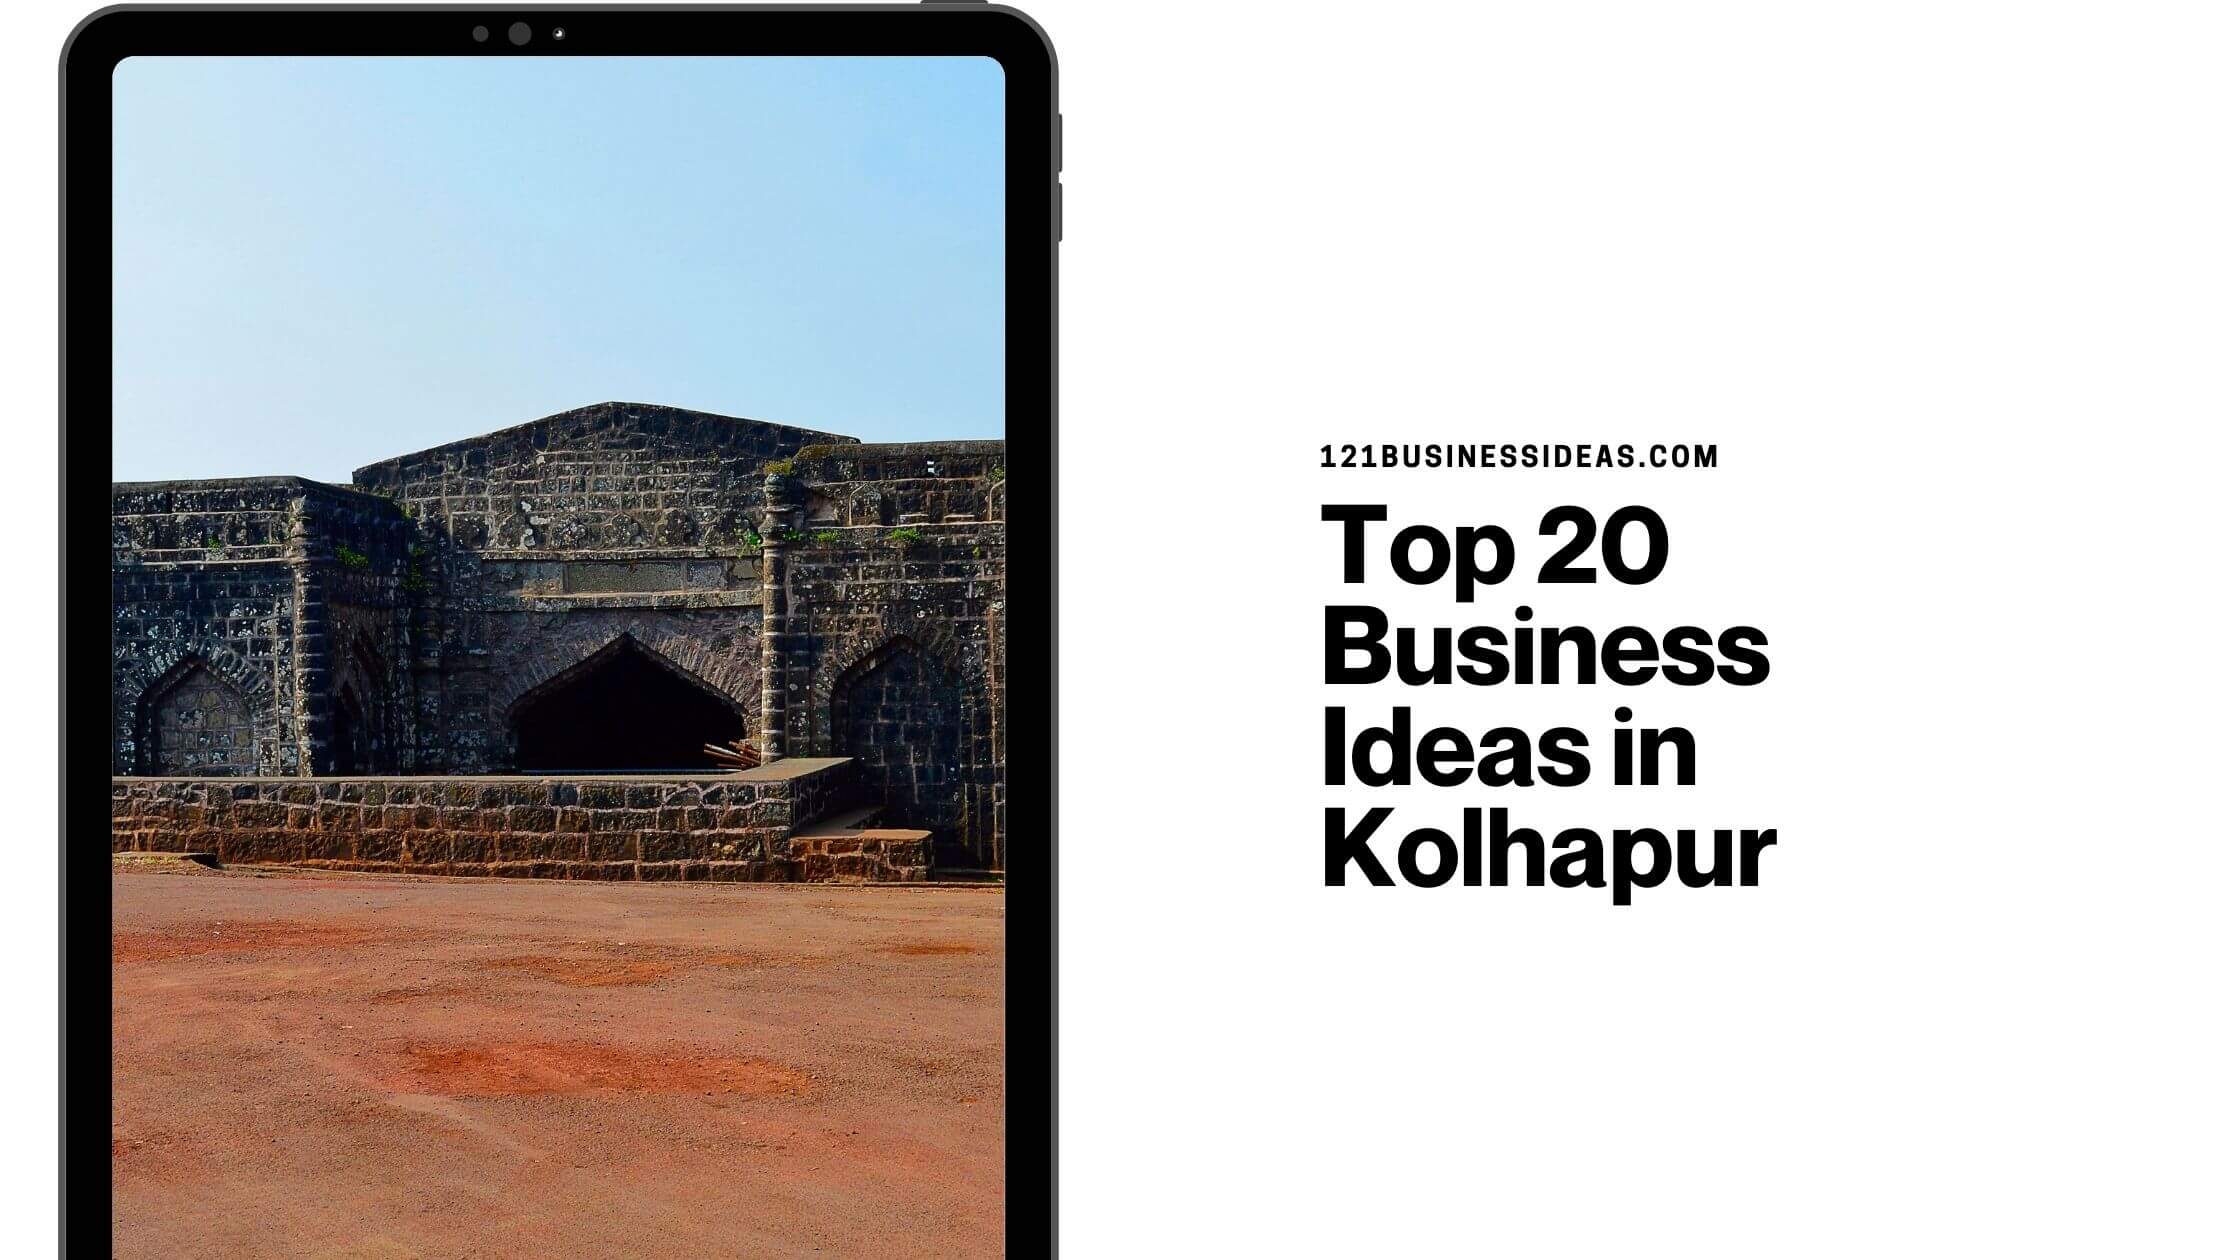 Top 20 Business Ideas in Kolhapur 2